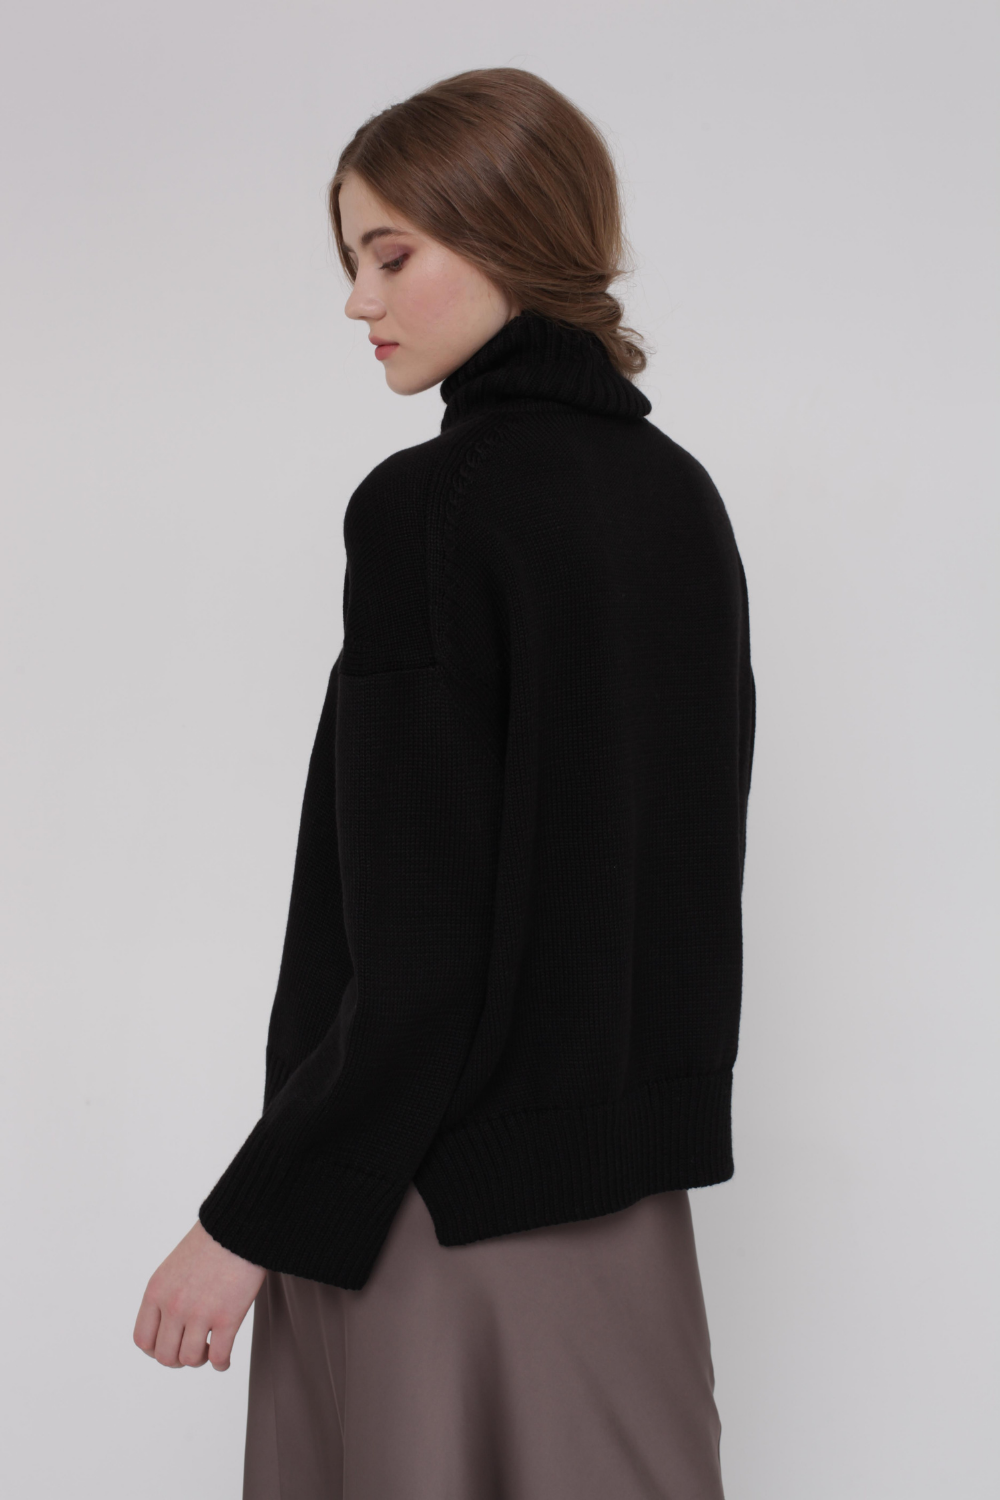 Wool sweater with a neckline (Miss Secret) PU-015